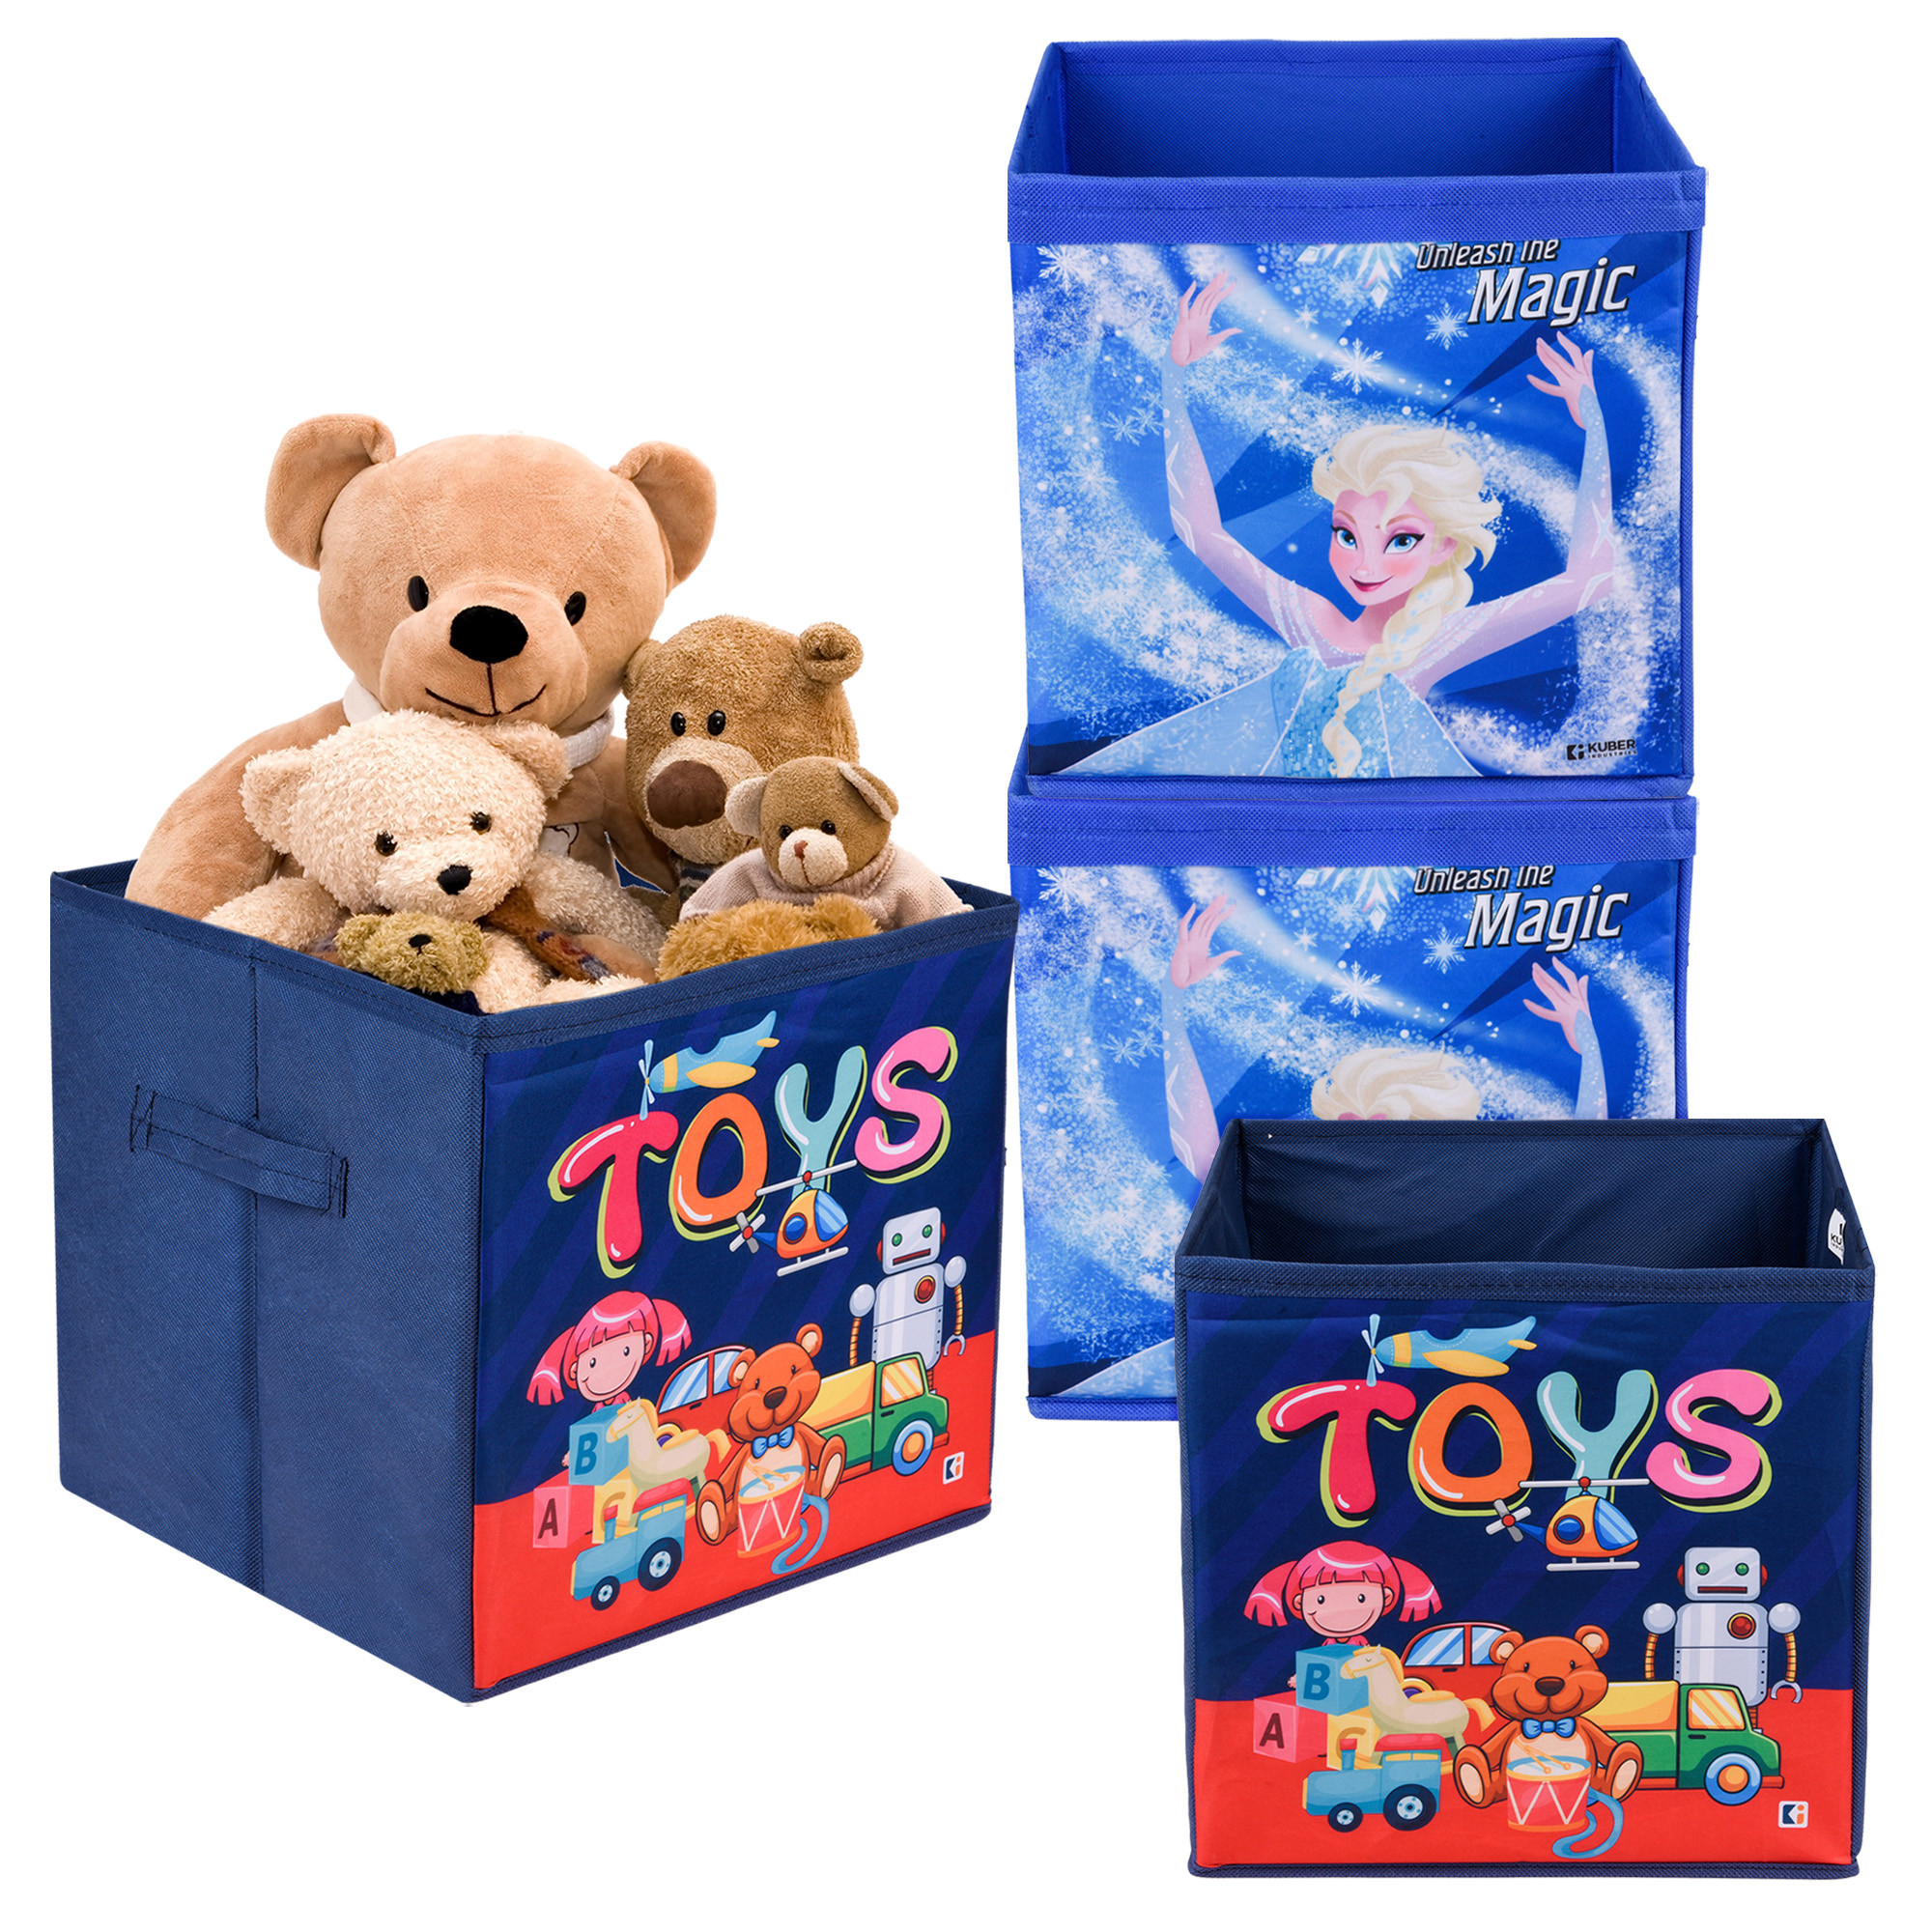 Kuber Industries Storage Box | Square Toy Storage Box | Wardrobe Organizer for Clothes-Books-Toys | Stationary Organizer | Drawer Organizer Box with Handle | Disney-Print | Navy Blue & Blue